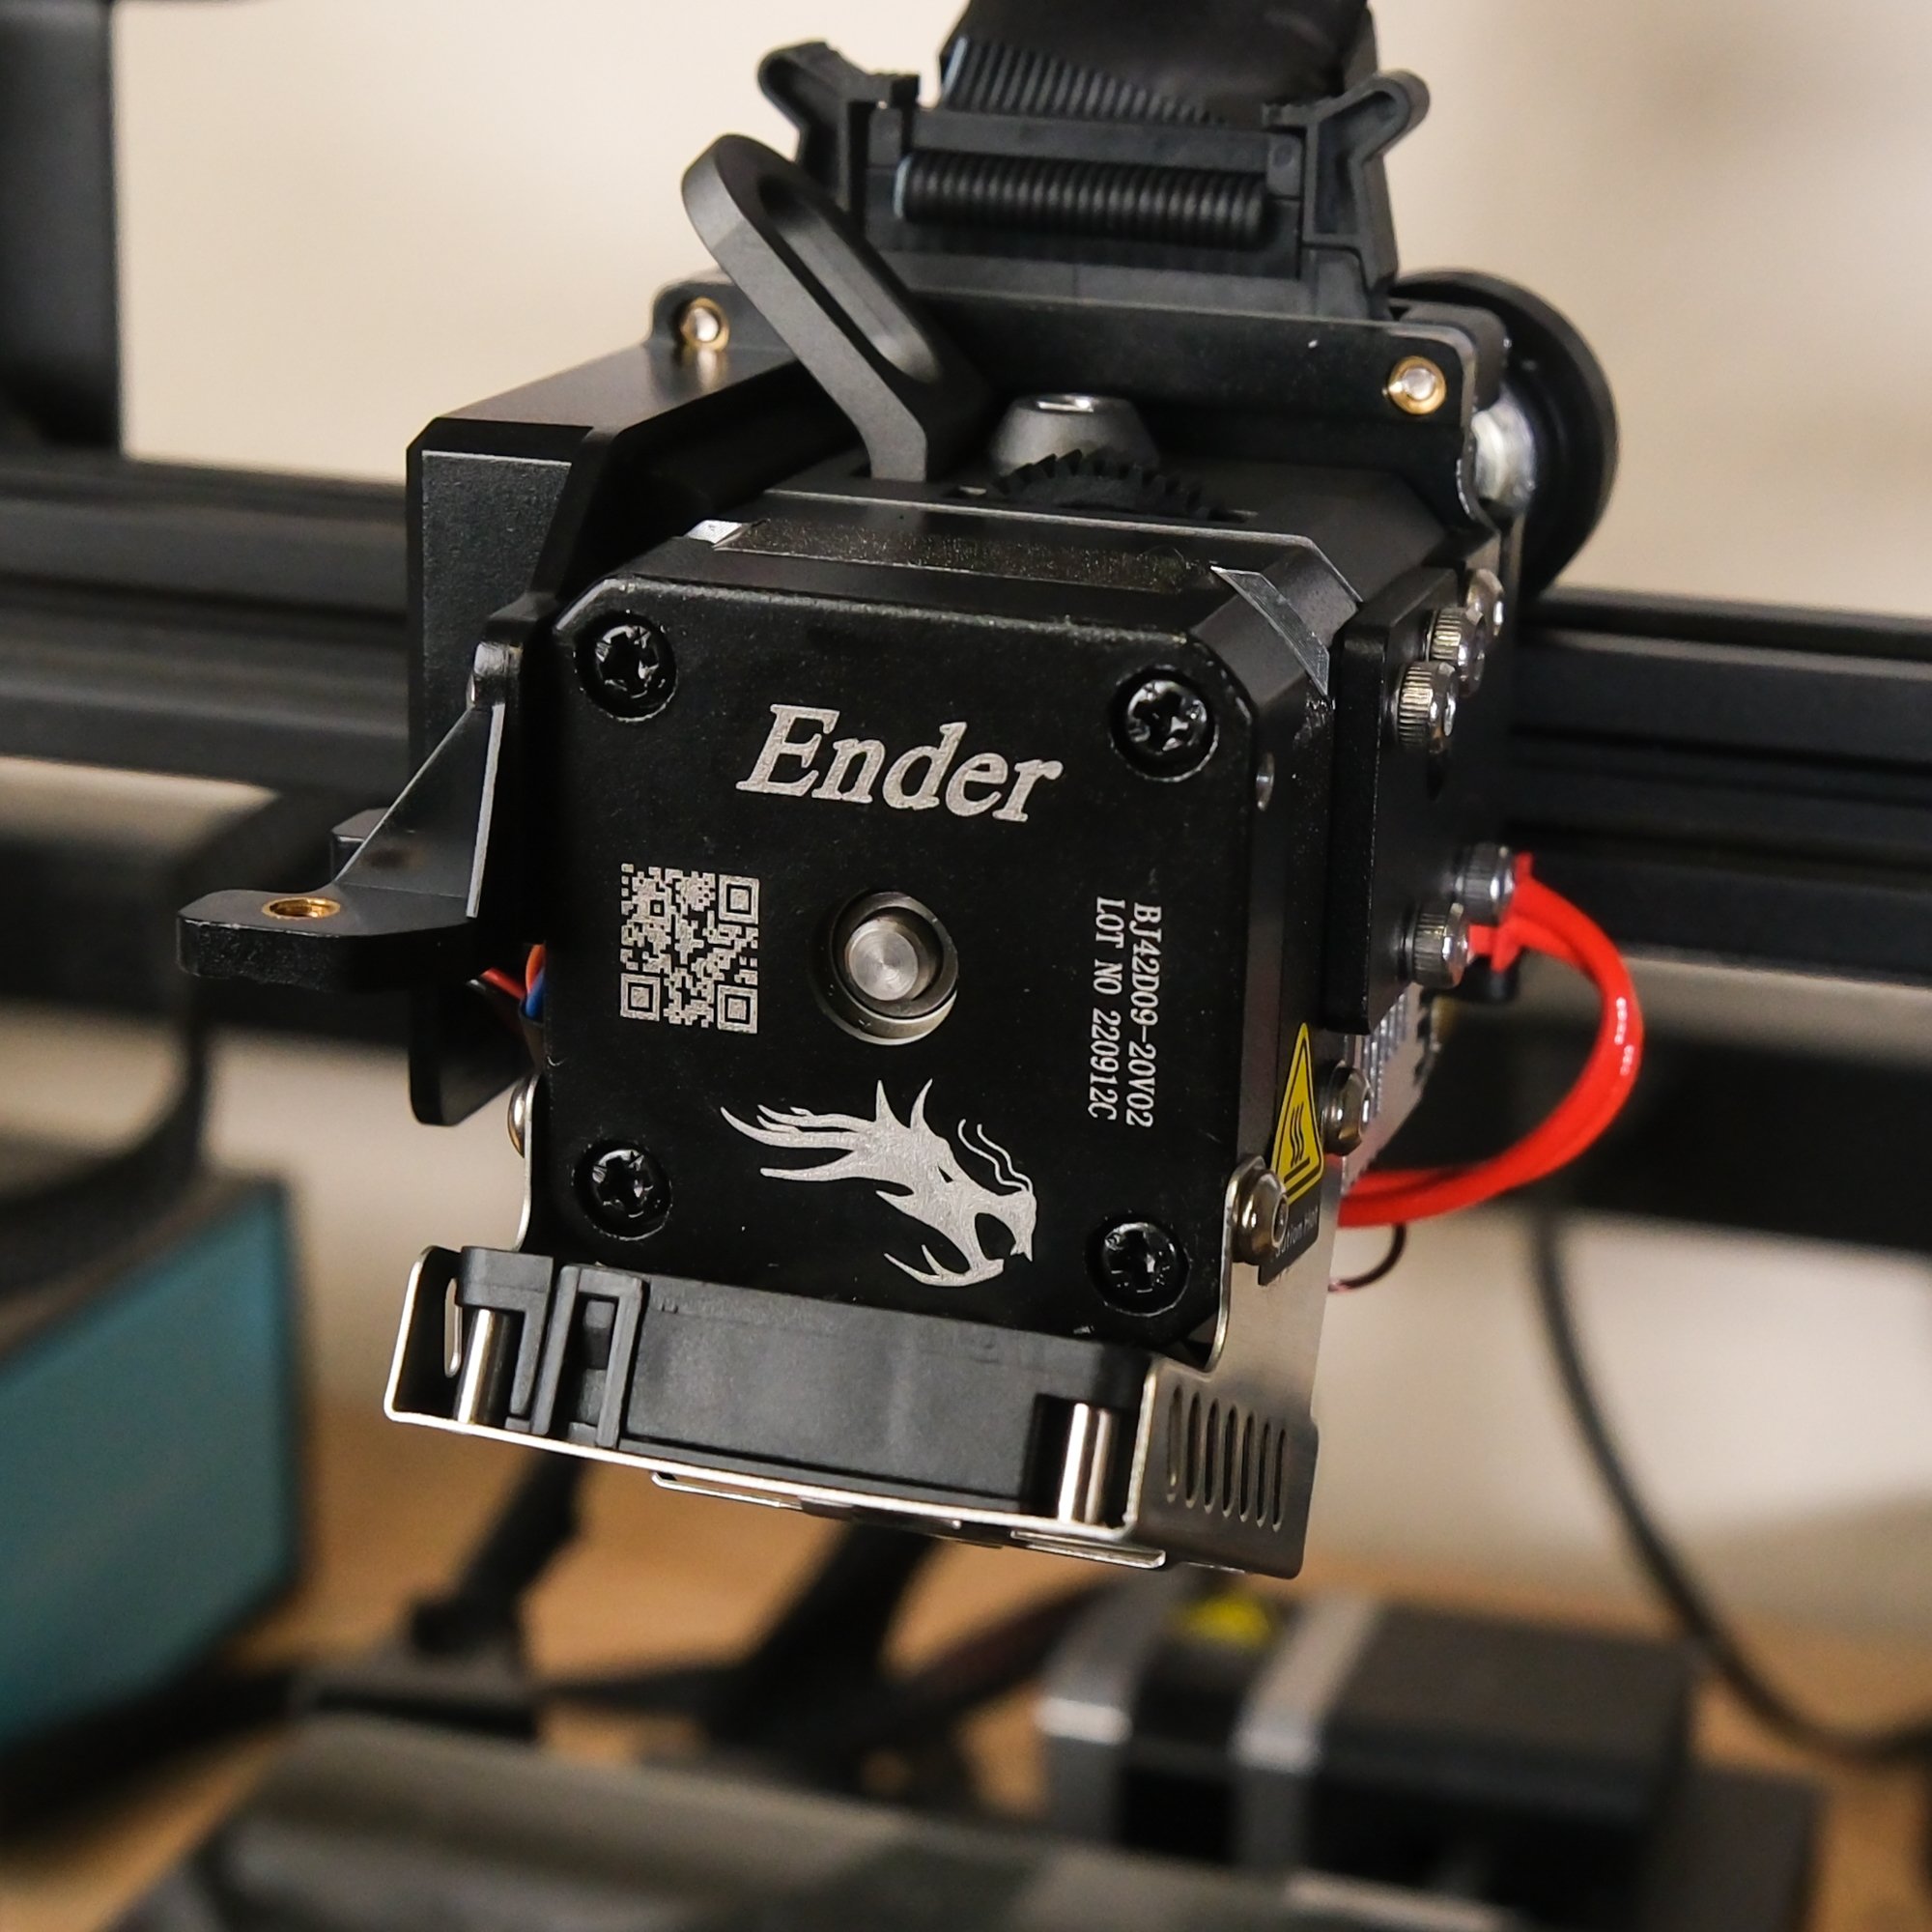 Creality Ender 3 - Optimization, Hints, Tips and Upgrades